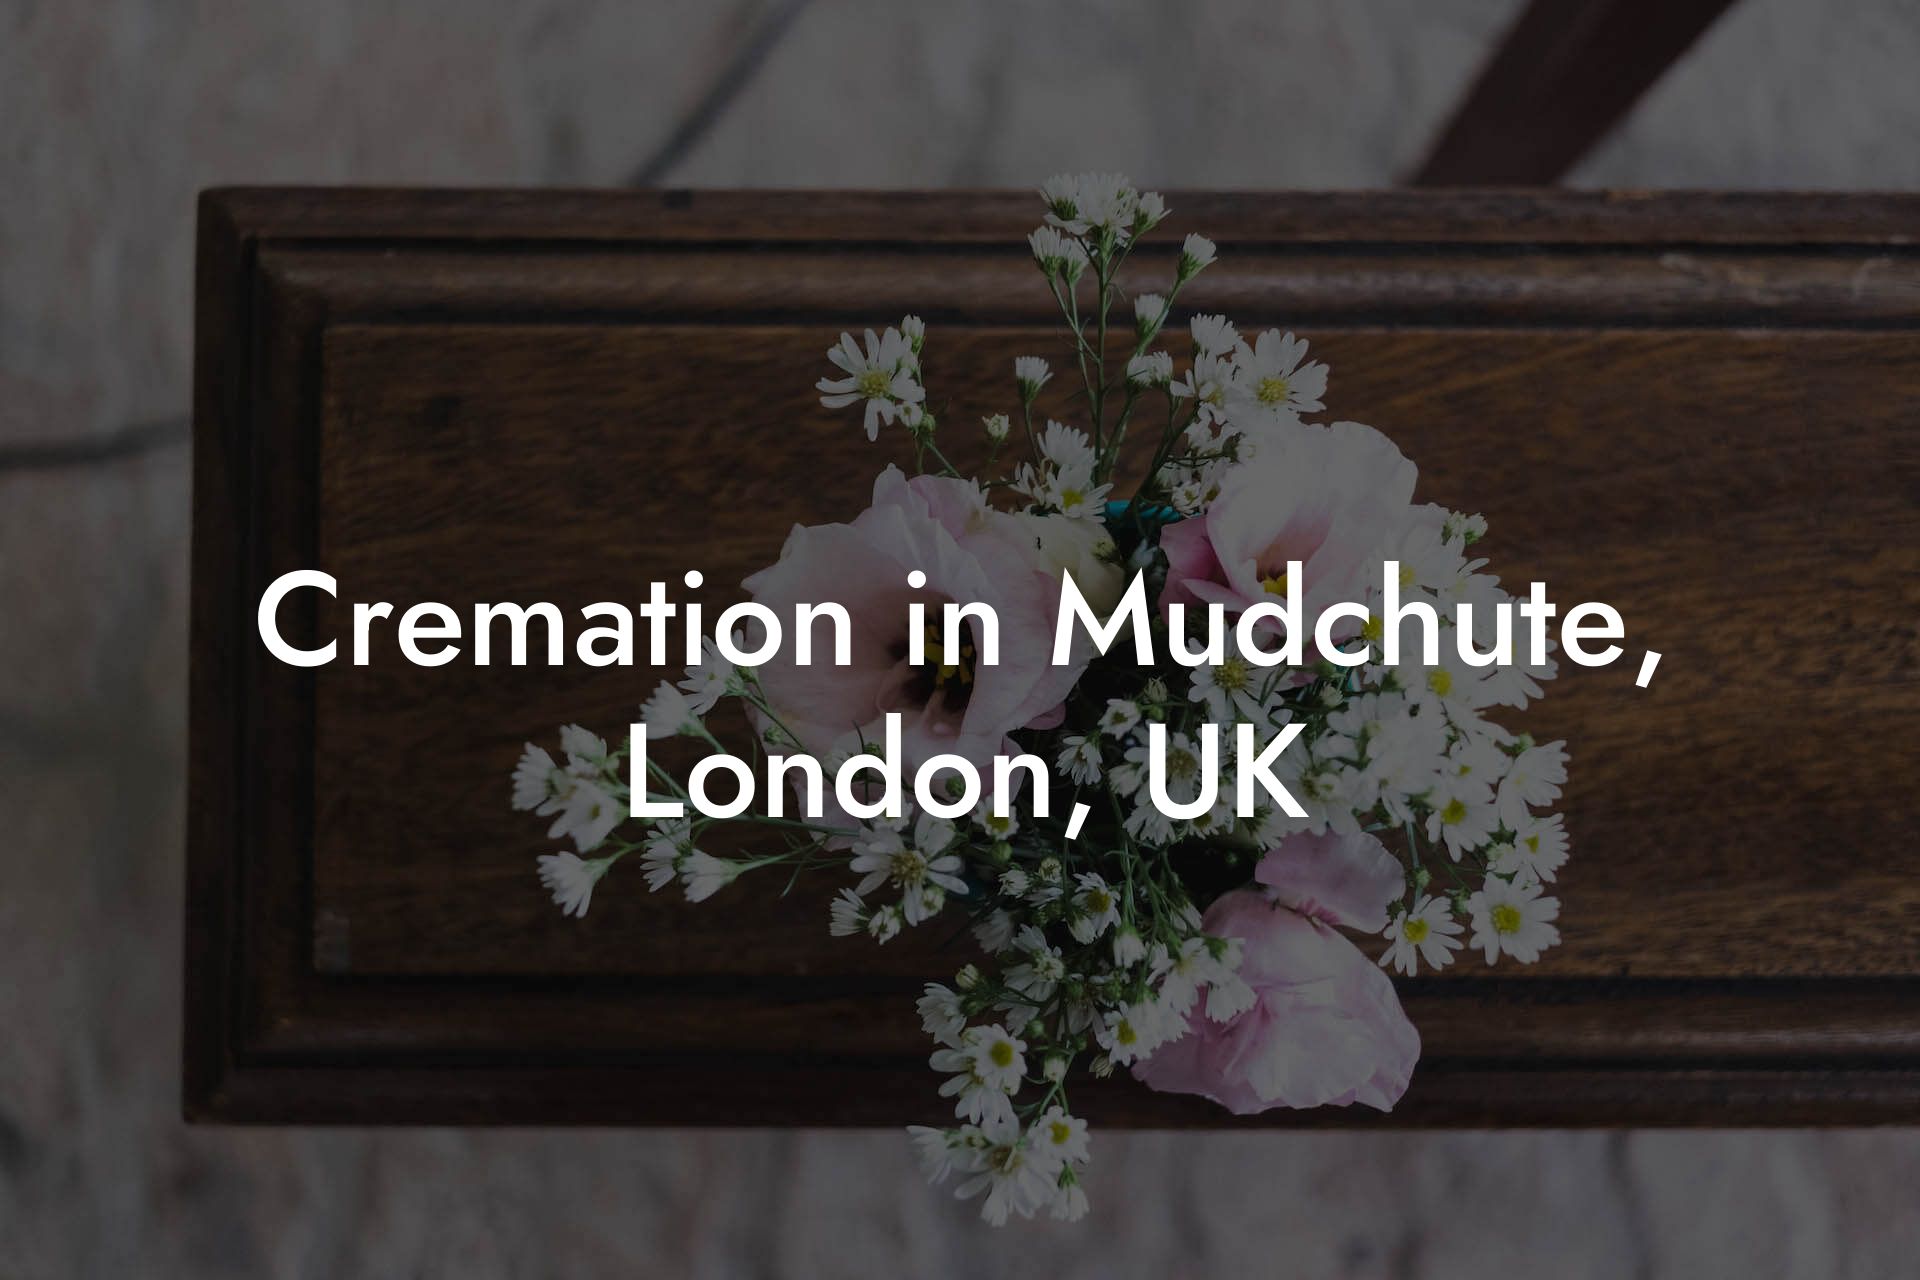 Cremation in Mudchute, London, UK